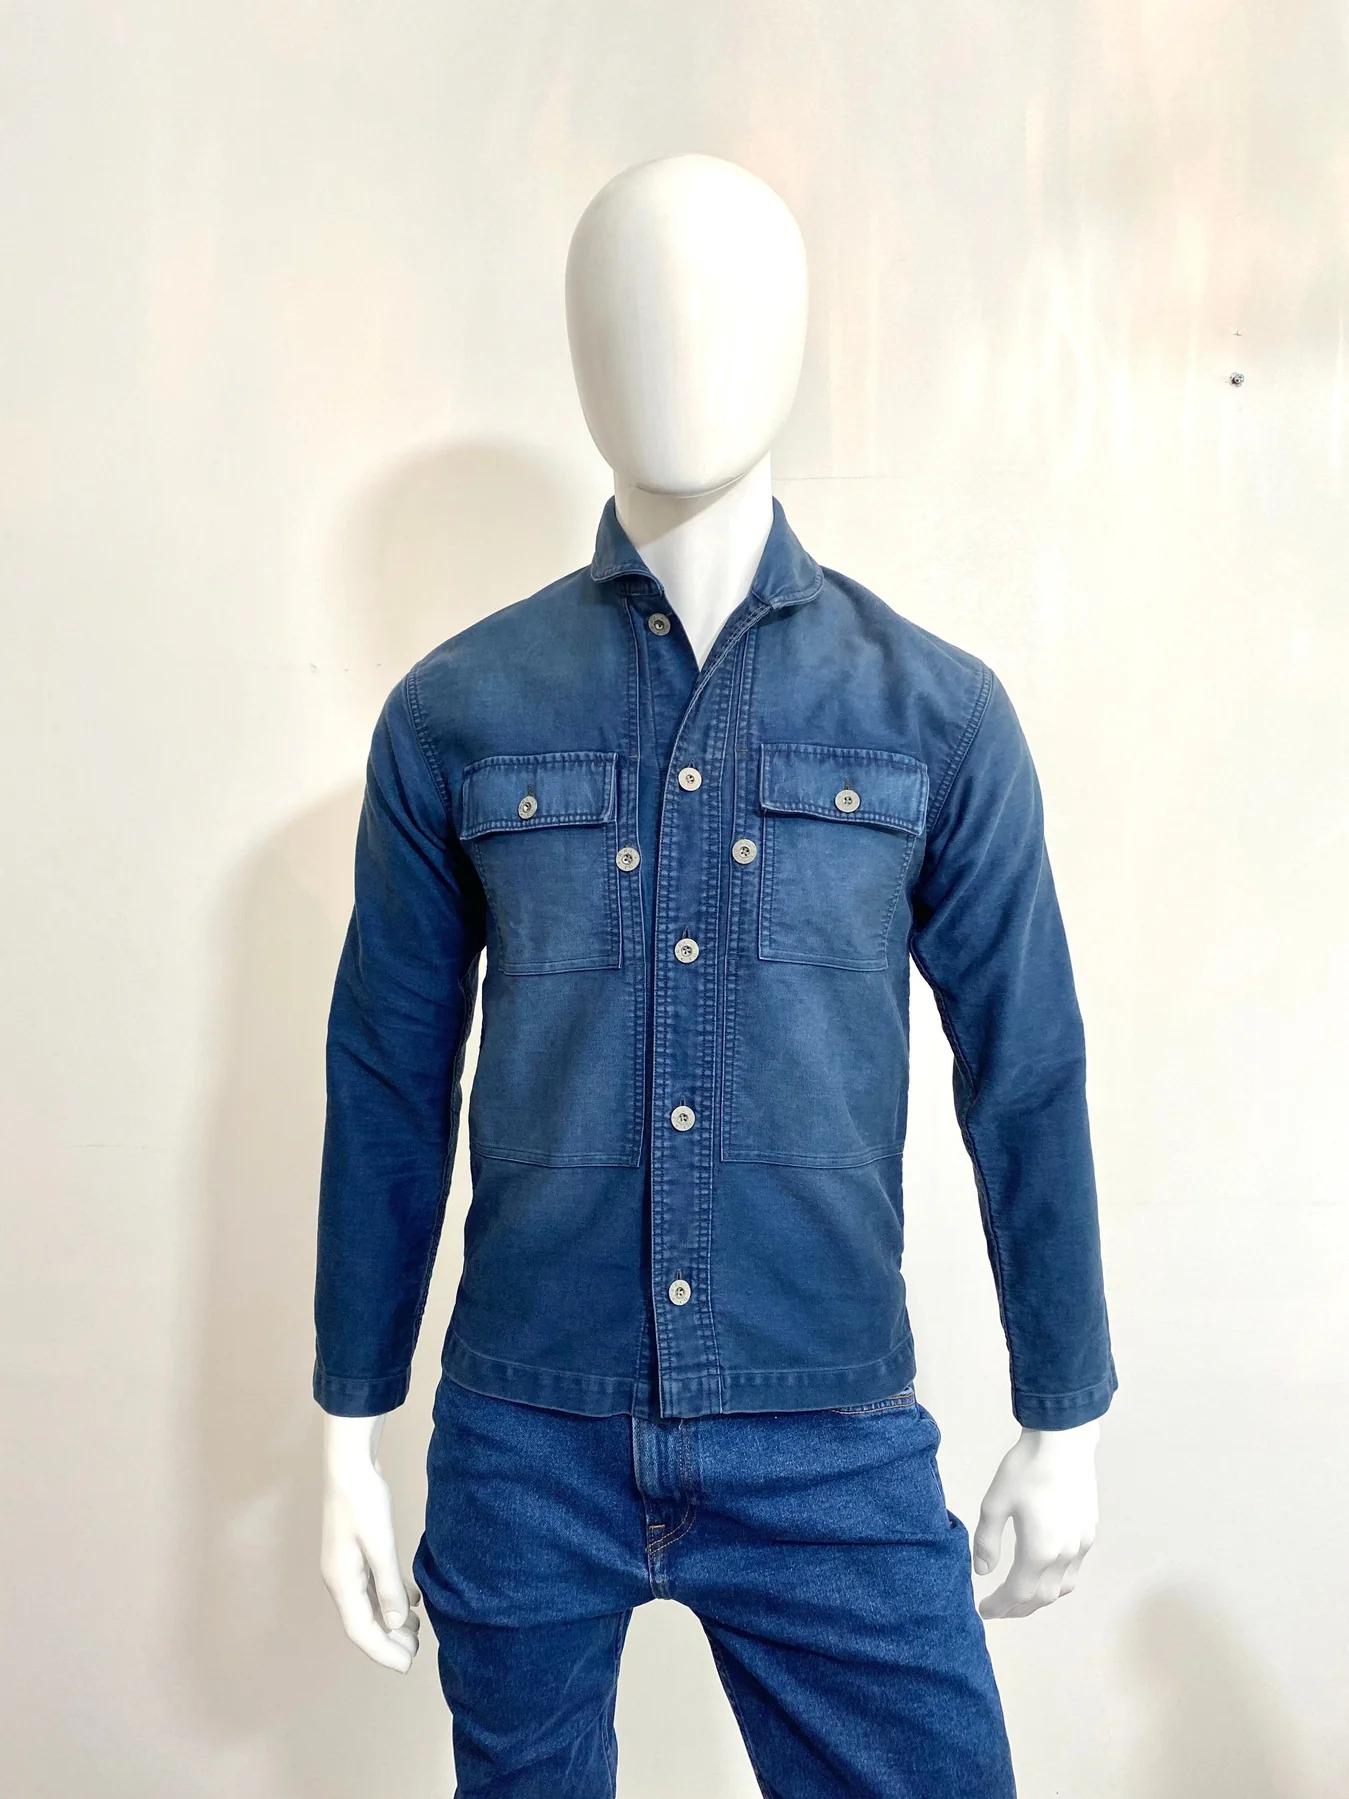 RRL Label - Ralph Lauren Denim Jacket.

Shirt style denim jacket. Button up closure and front pocket detailing. 

Composition label missing.
Size - XS
Condition - Very Good